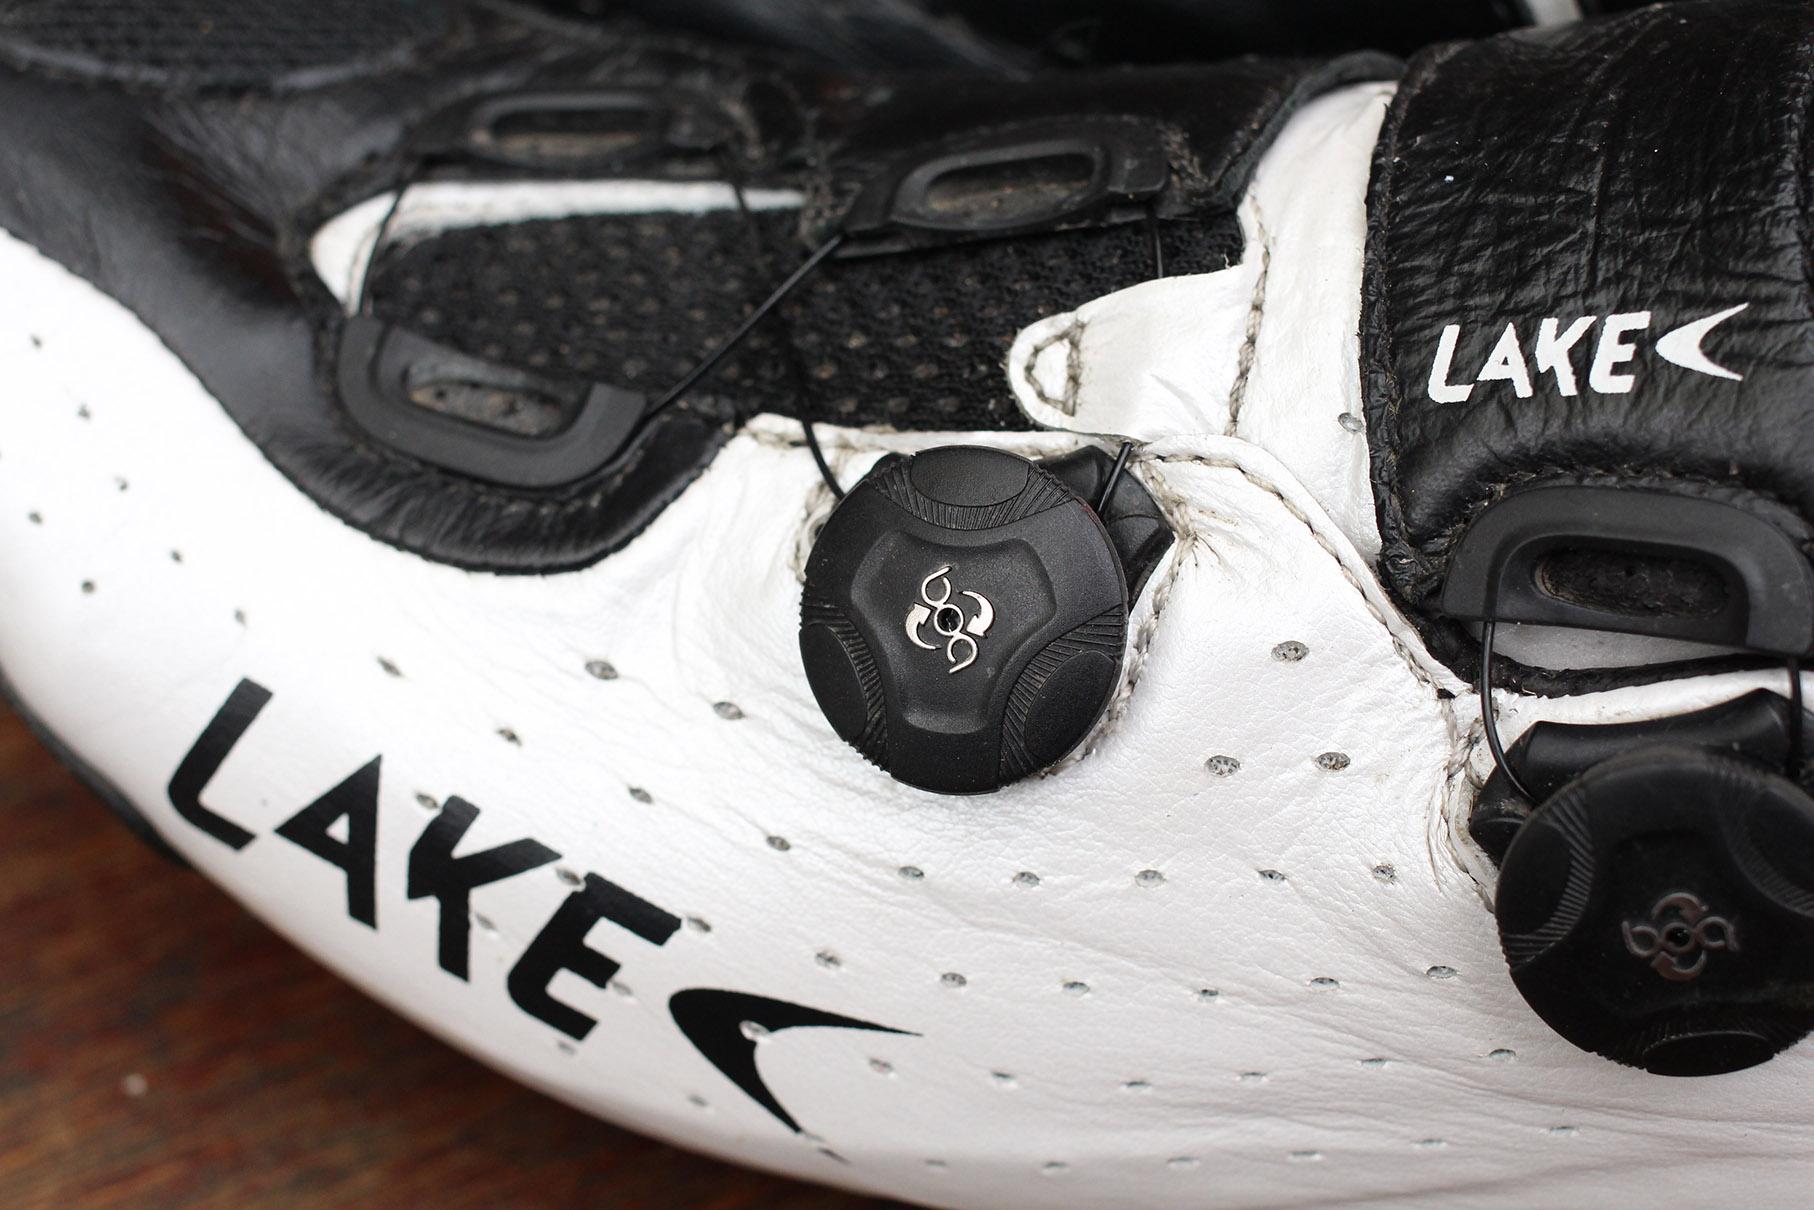 Review: Lake CX402 Road Cycling shoes | road.cc